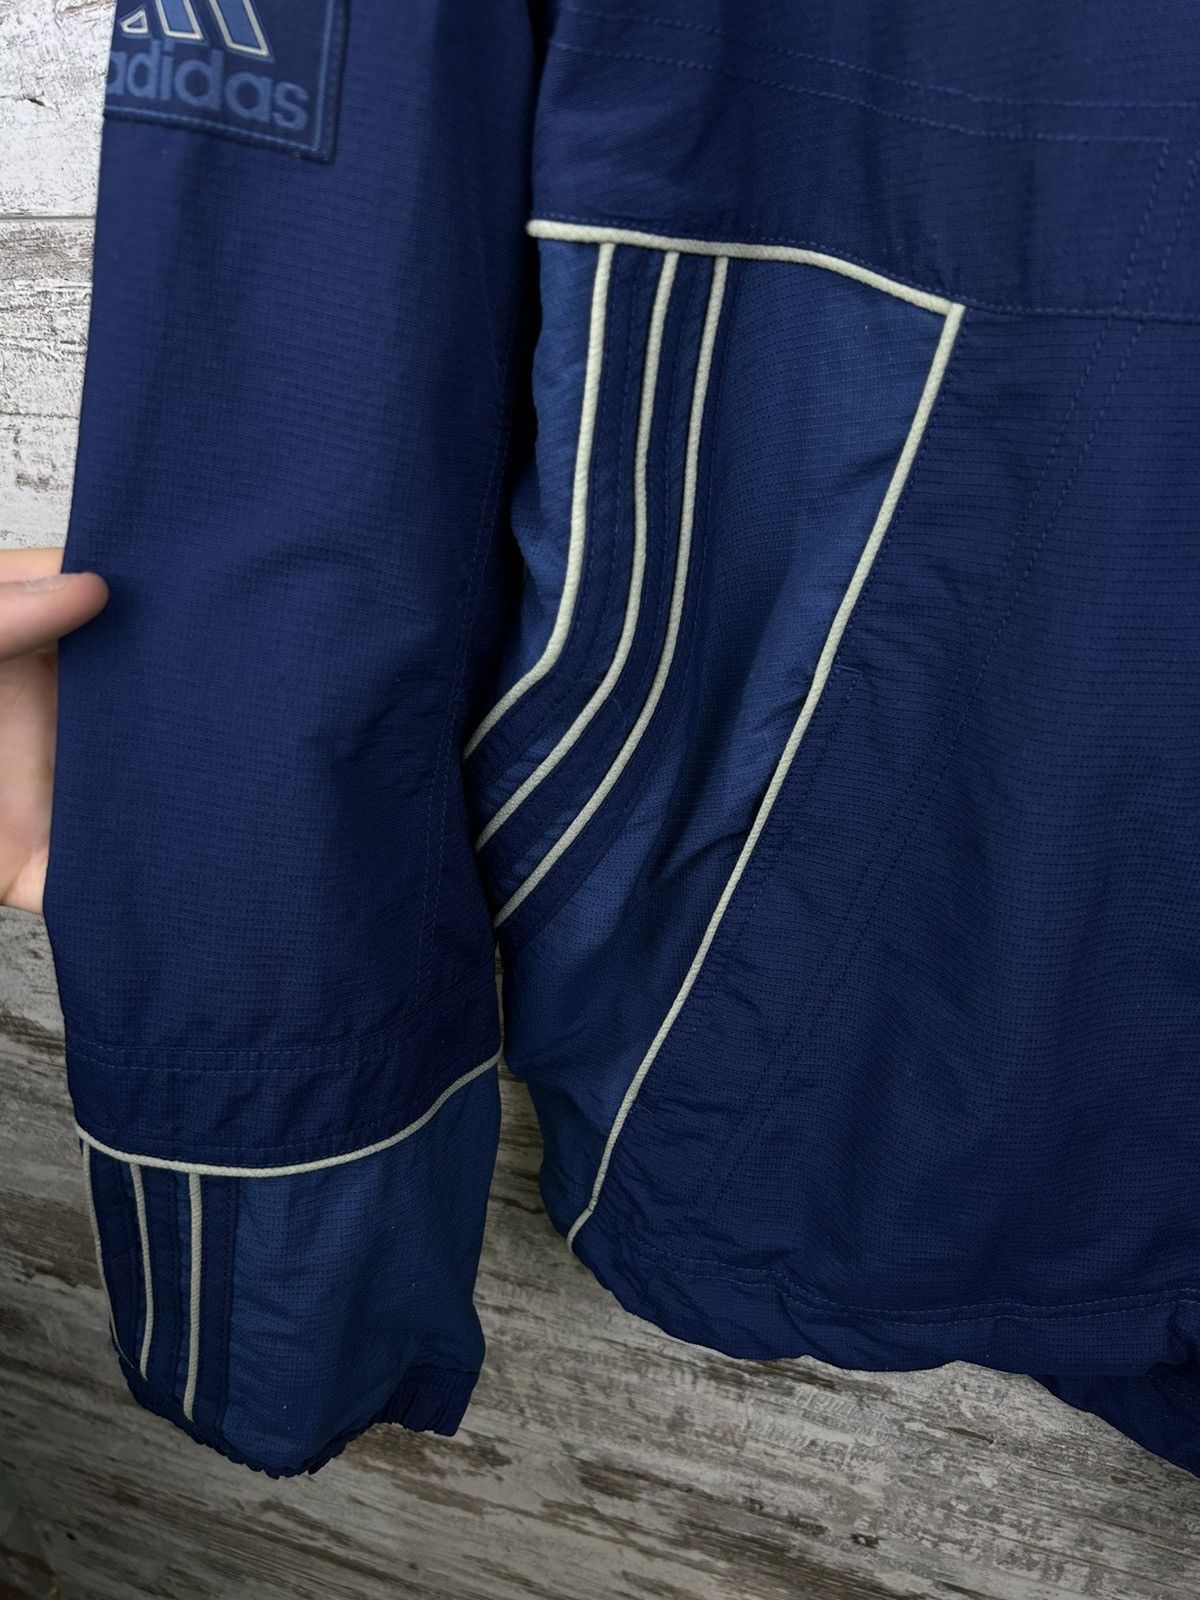 Adidas Mens Vintage Adidas Stripes Olympic track jacket y2k rare Size US M / EU 48-50 / 2 - 6 Thumbnail